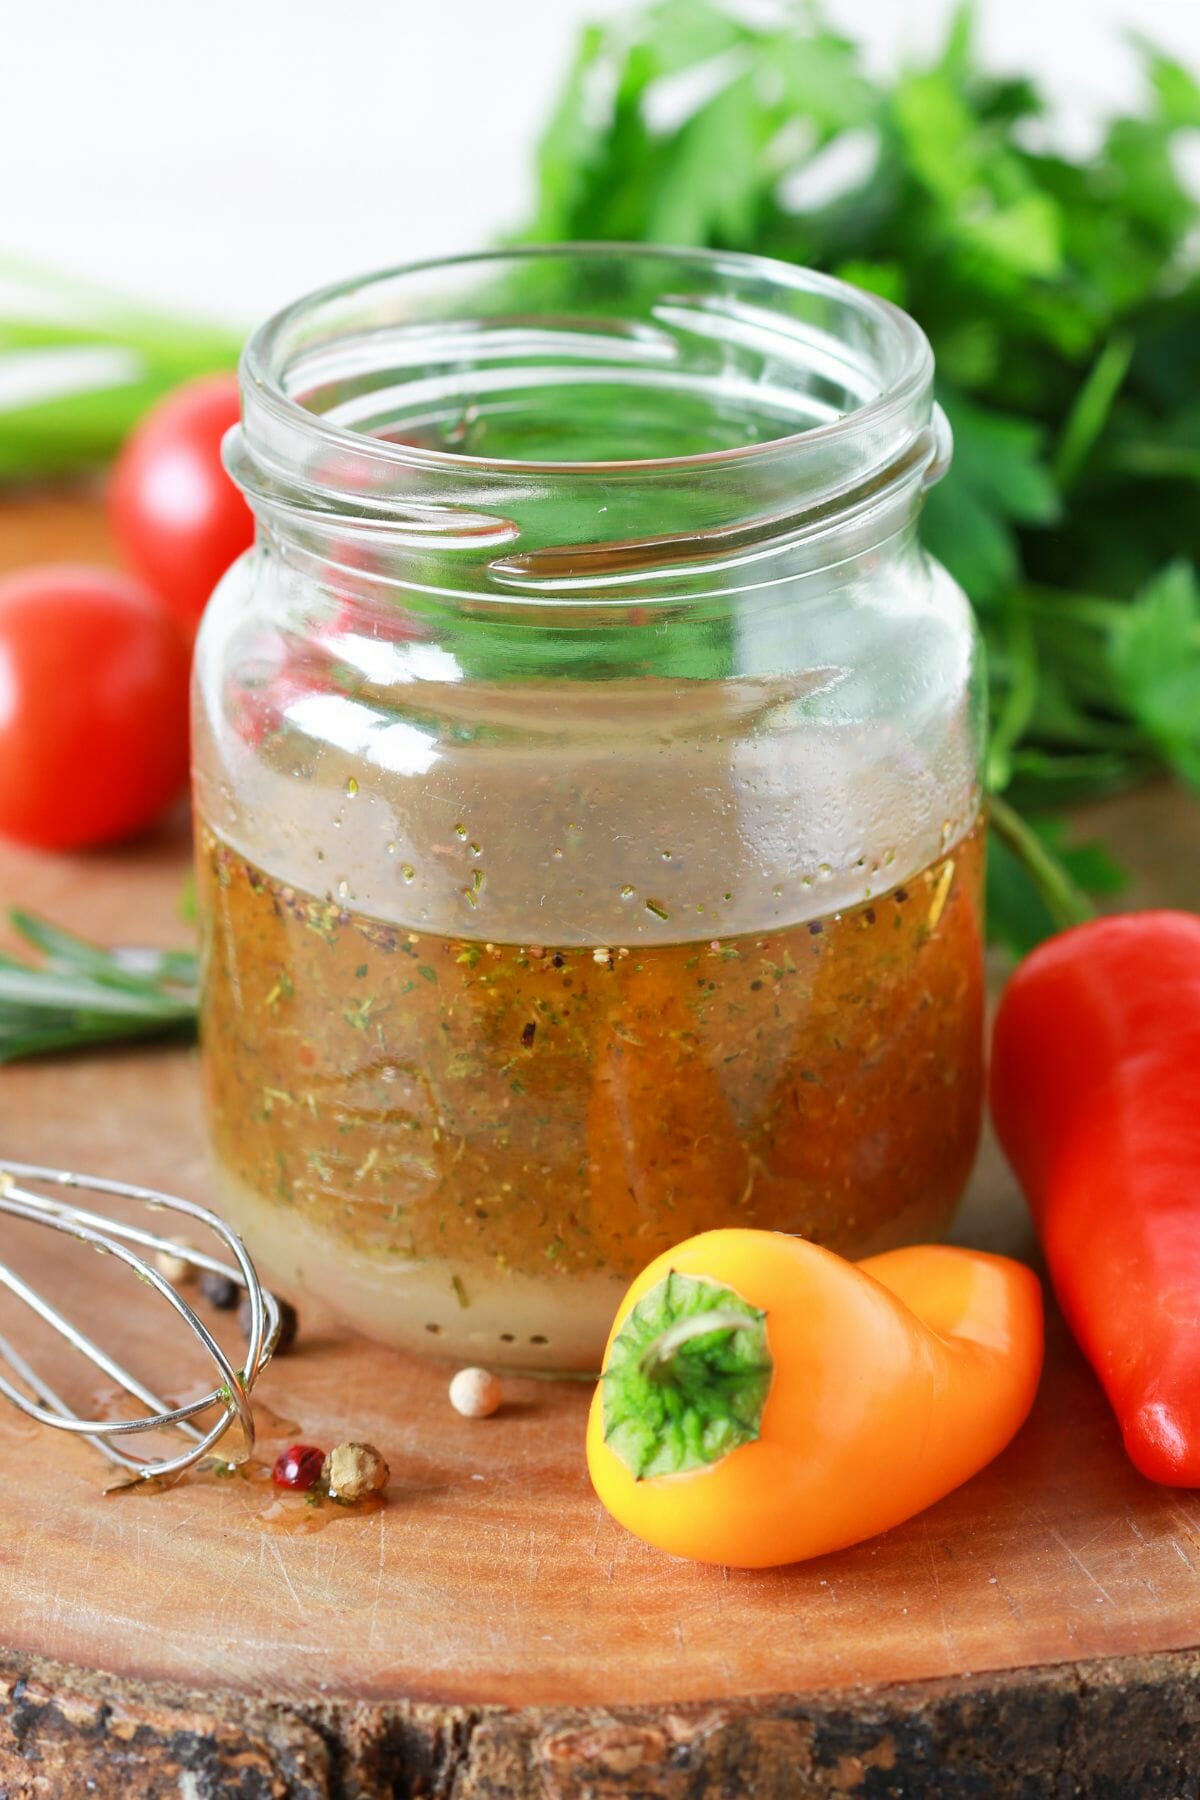 salad dressing in a glass jar